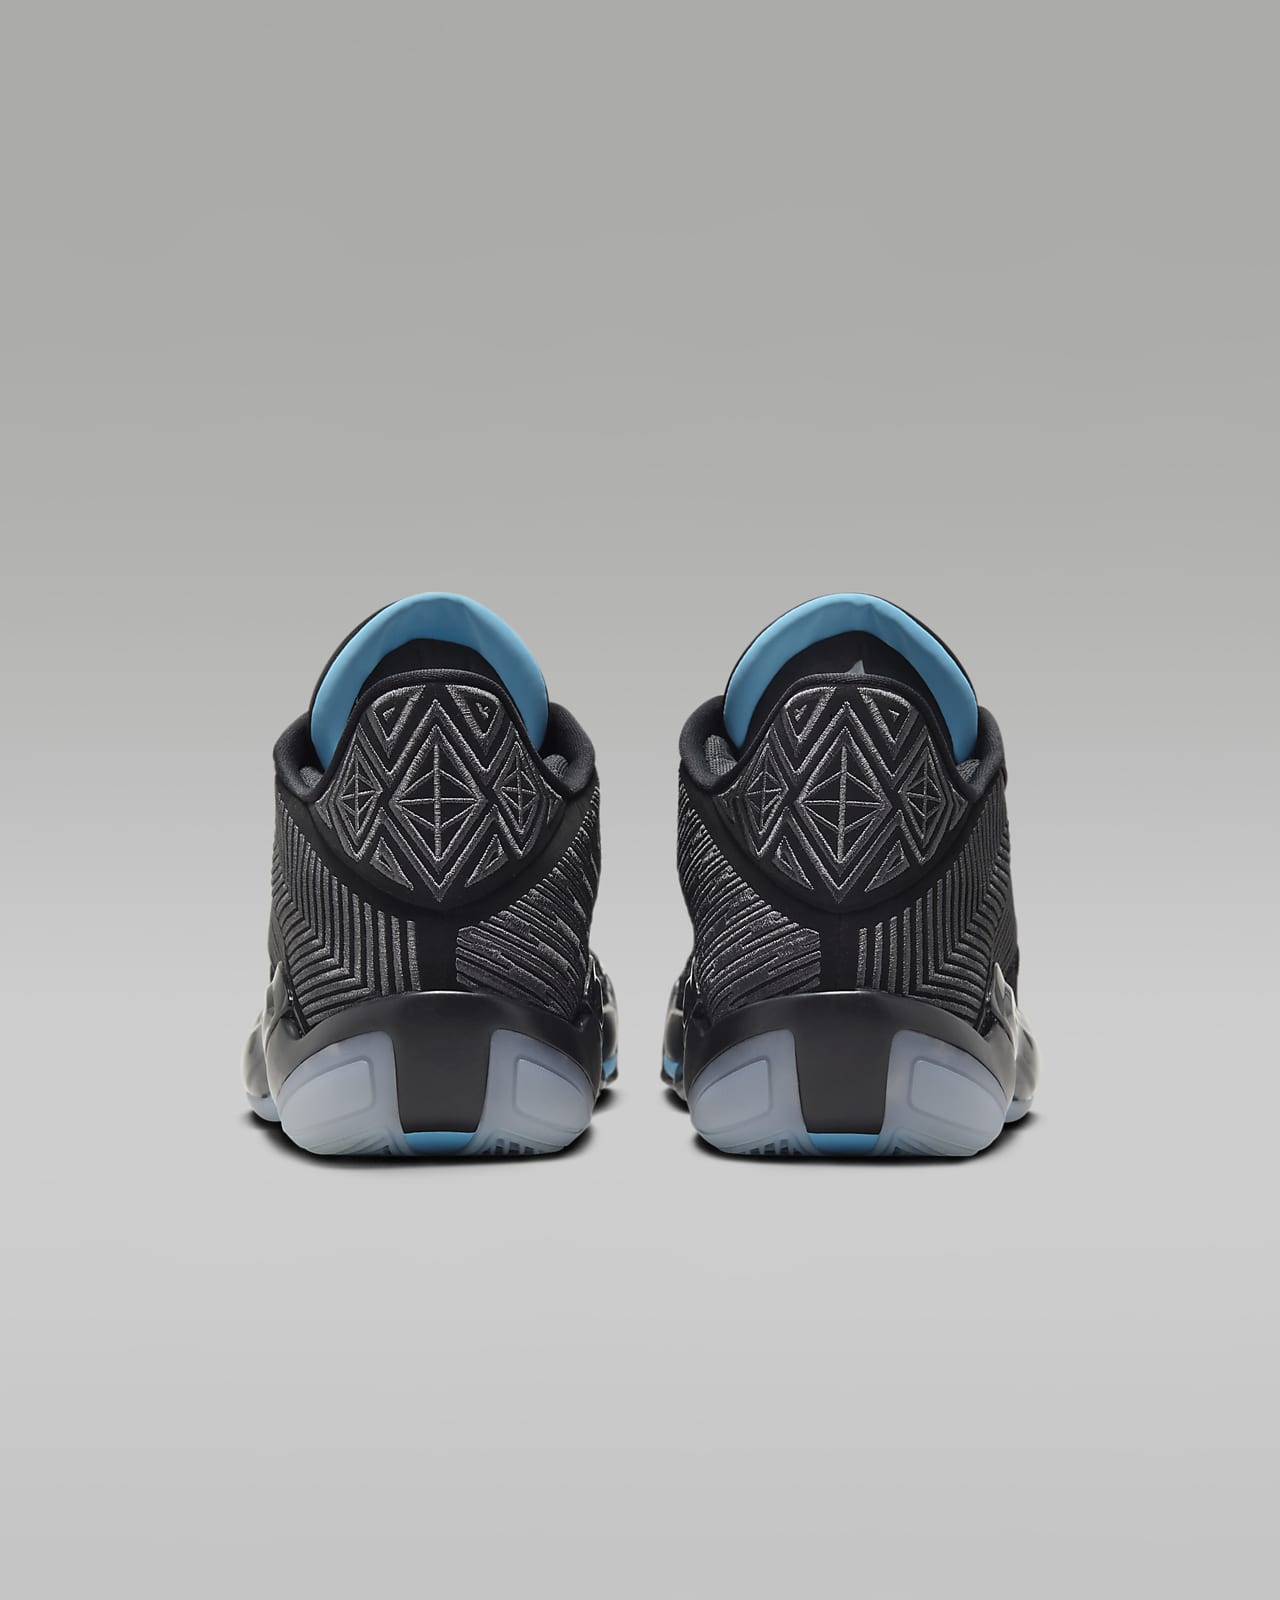 Air Jordan XXXVIII Low 'Alumni Blue' Basketball Shoes